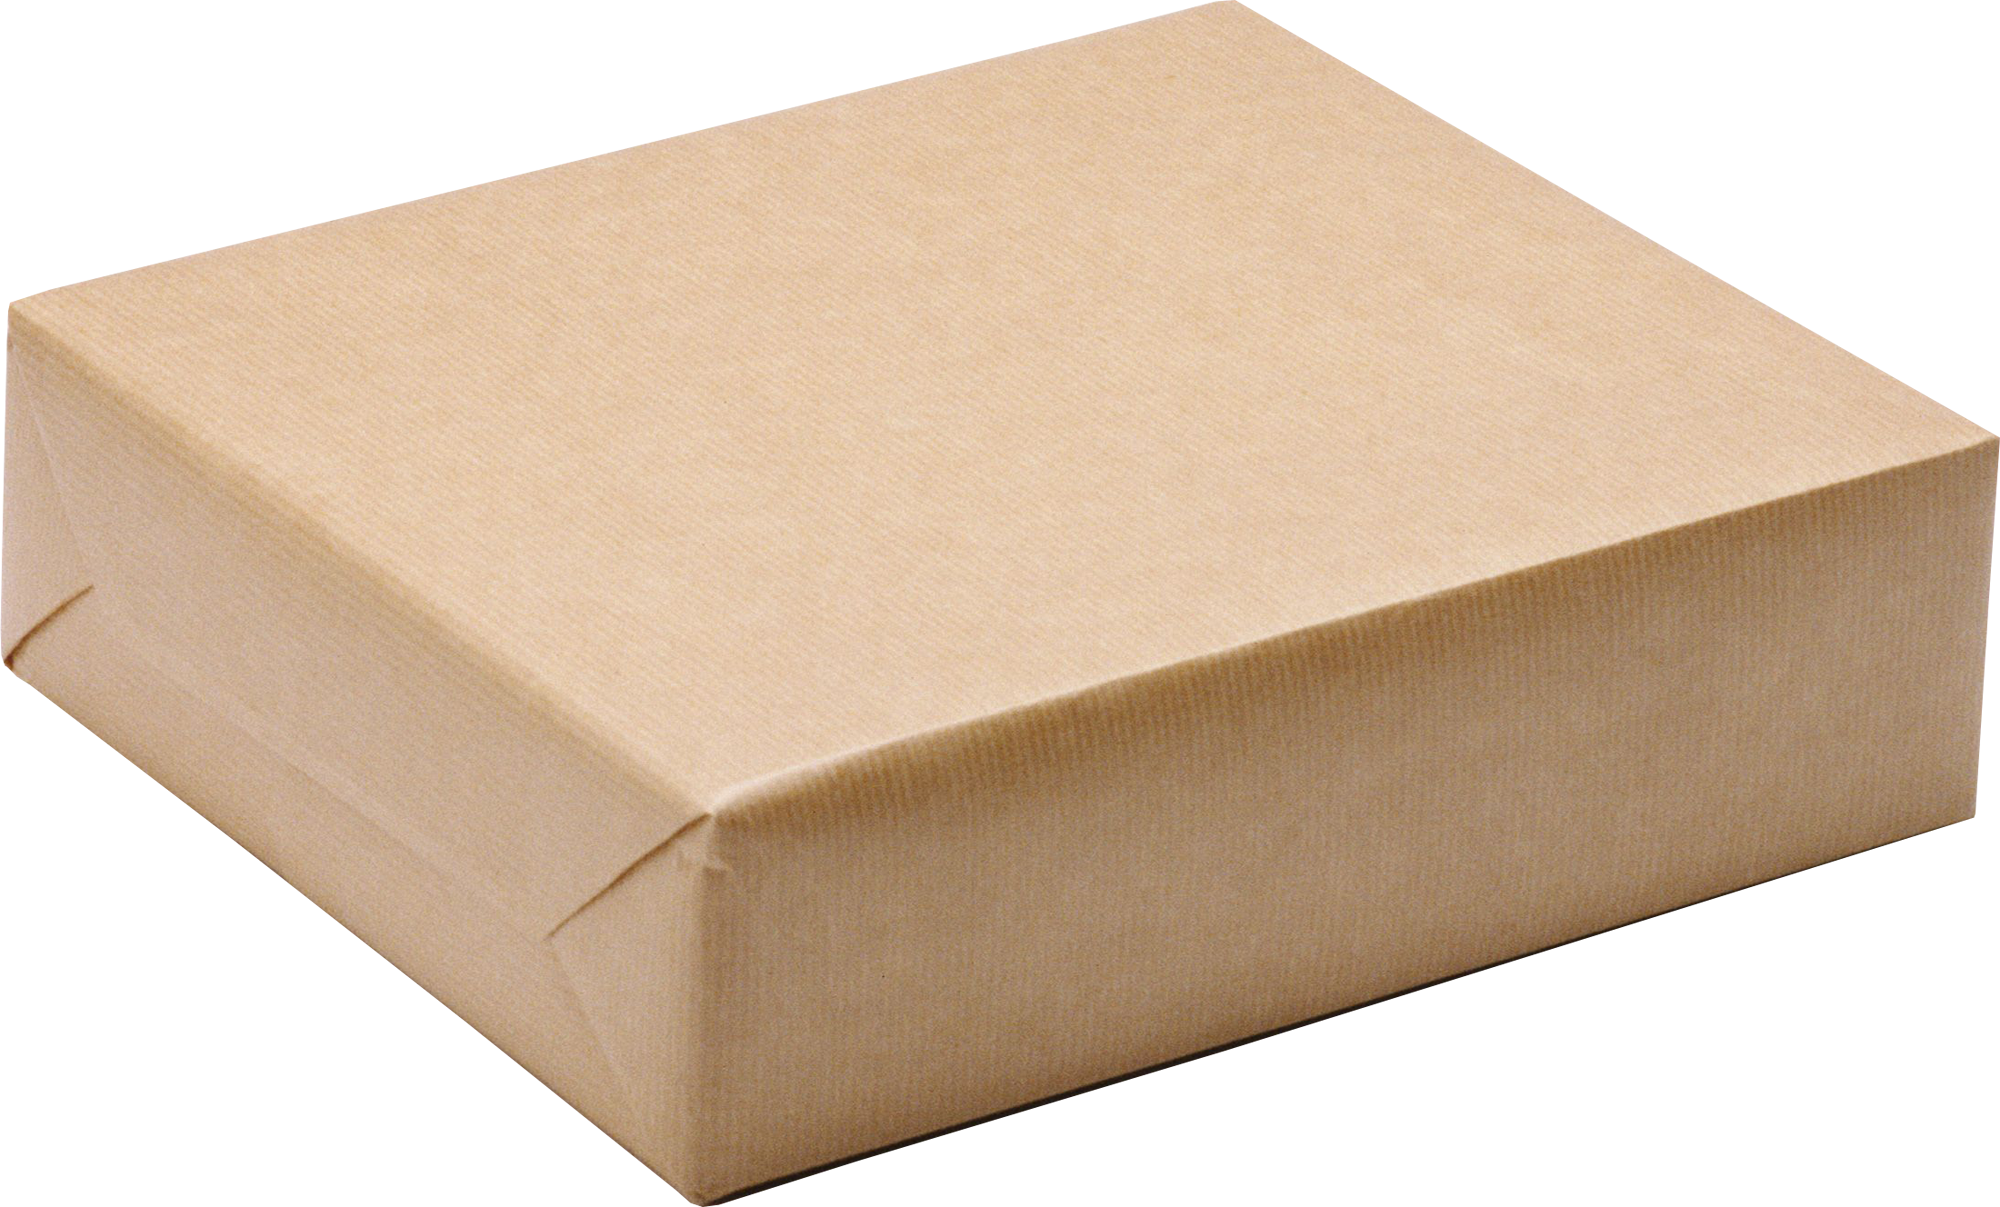 Размер коробки бумаги а3. Картонная коробка. Квадратные картонные коробки. Прямоугольная картонная коробка. Коробка картонная квадратная.